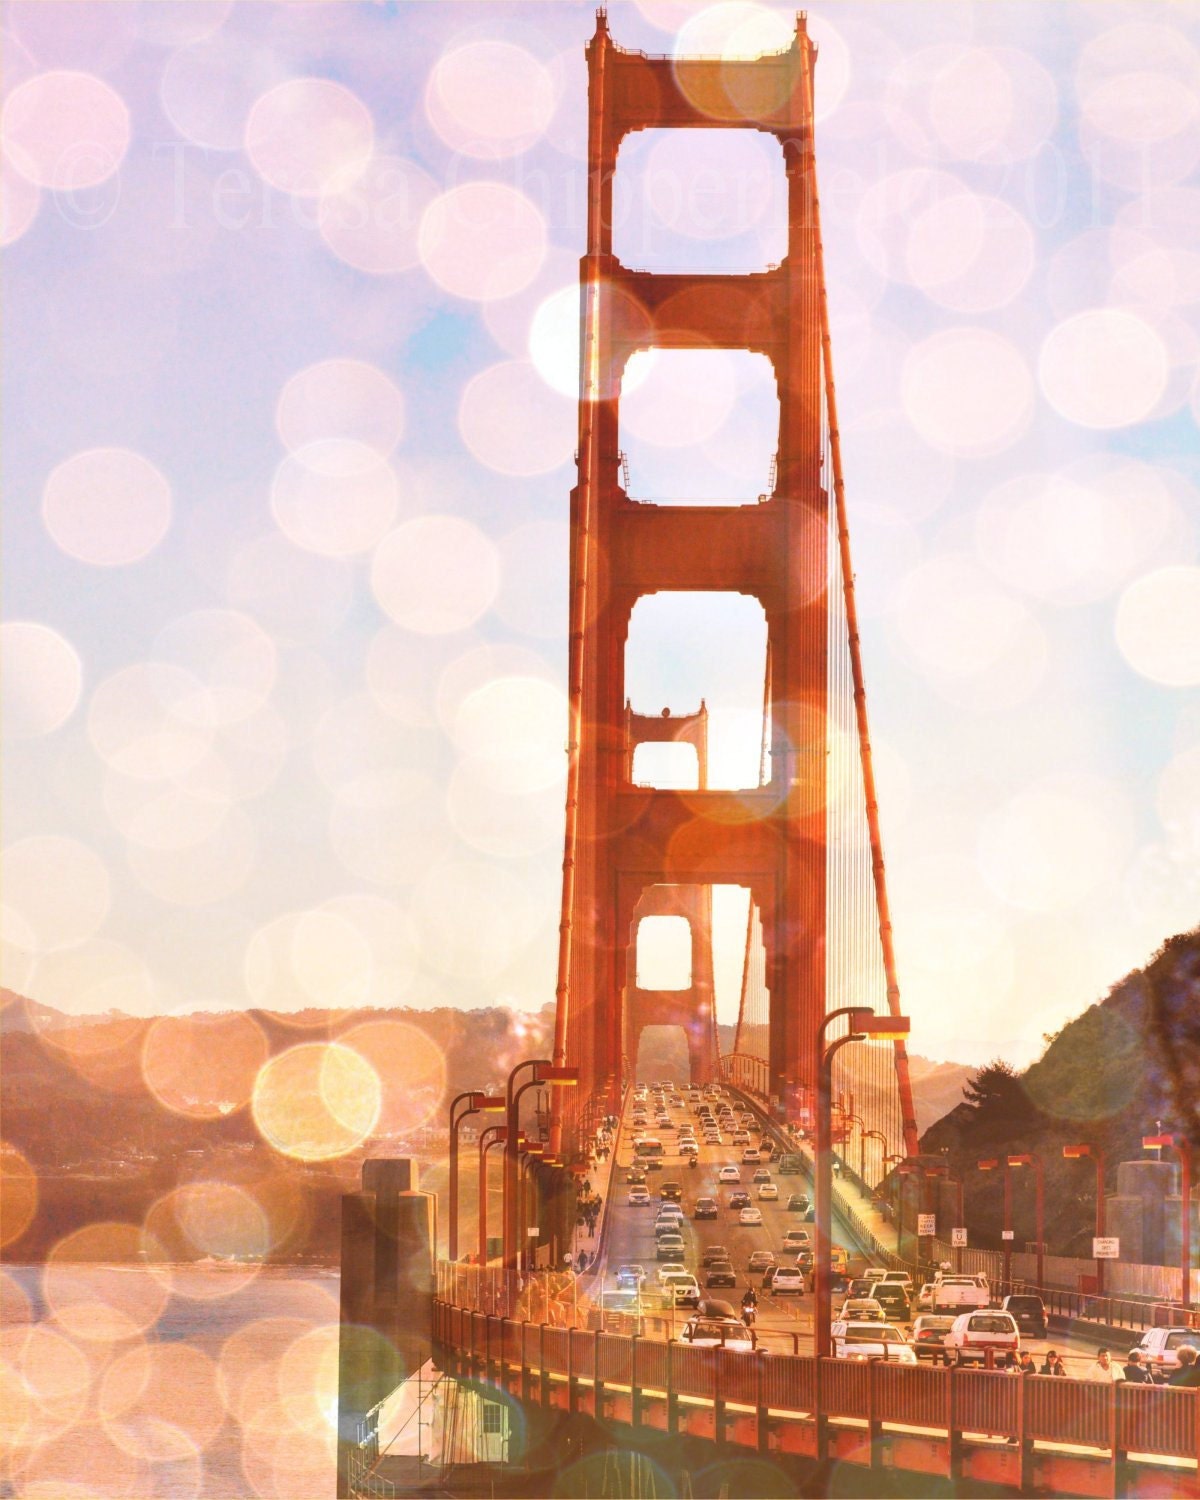 The Golden Gate Bridge - San Francisco - California - 8 x 10 - Digital Fine Art Multi Layer Photo Print - National Historical Monument